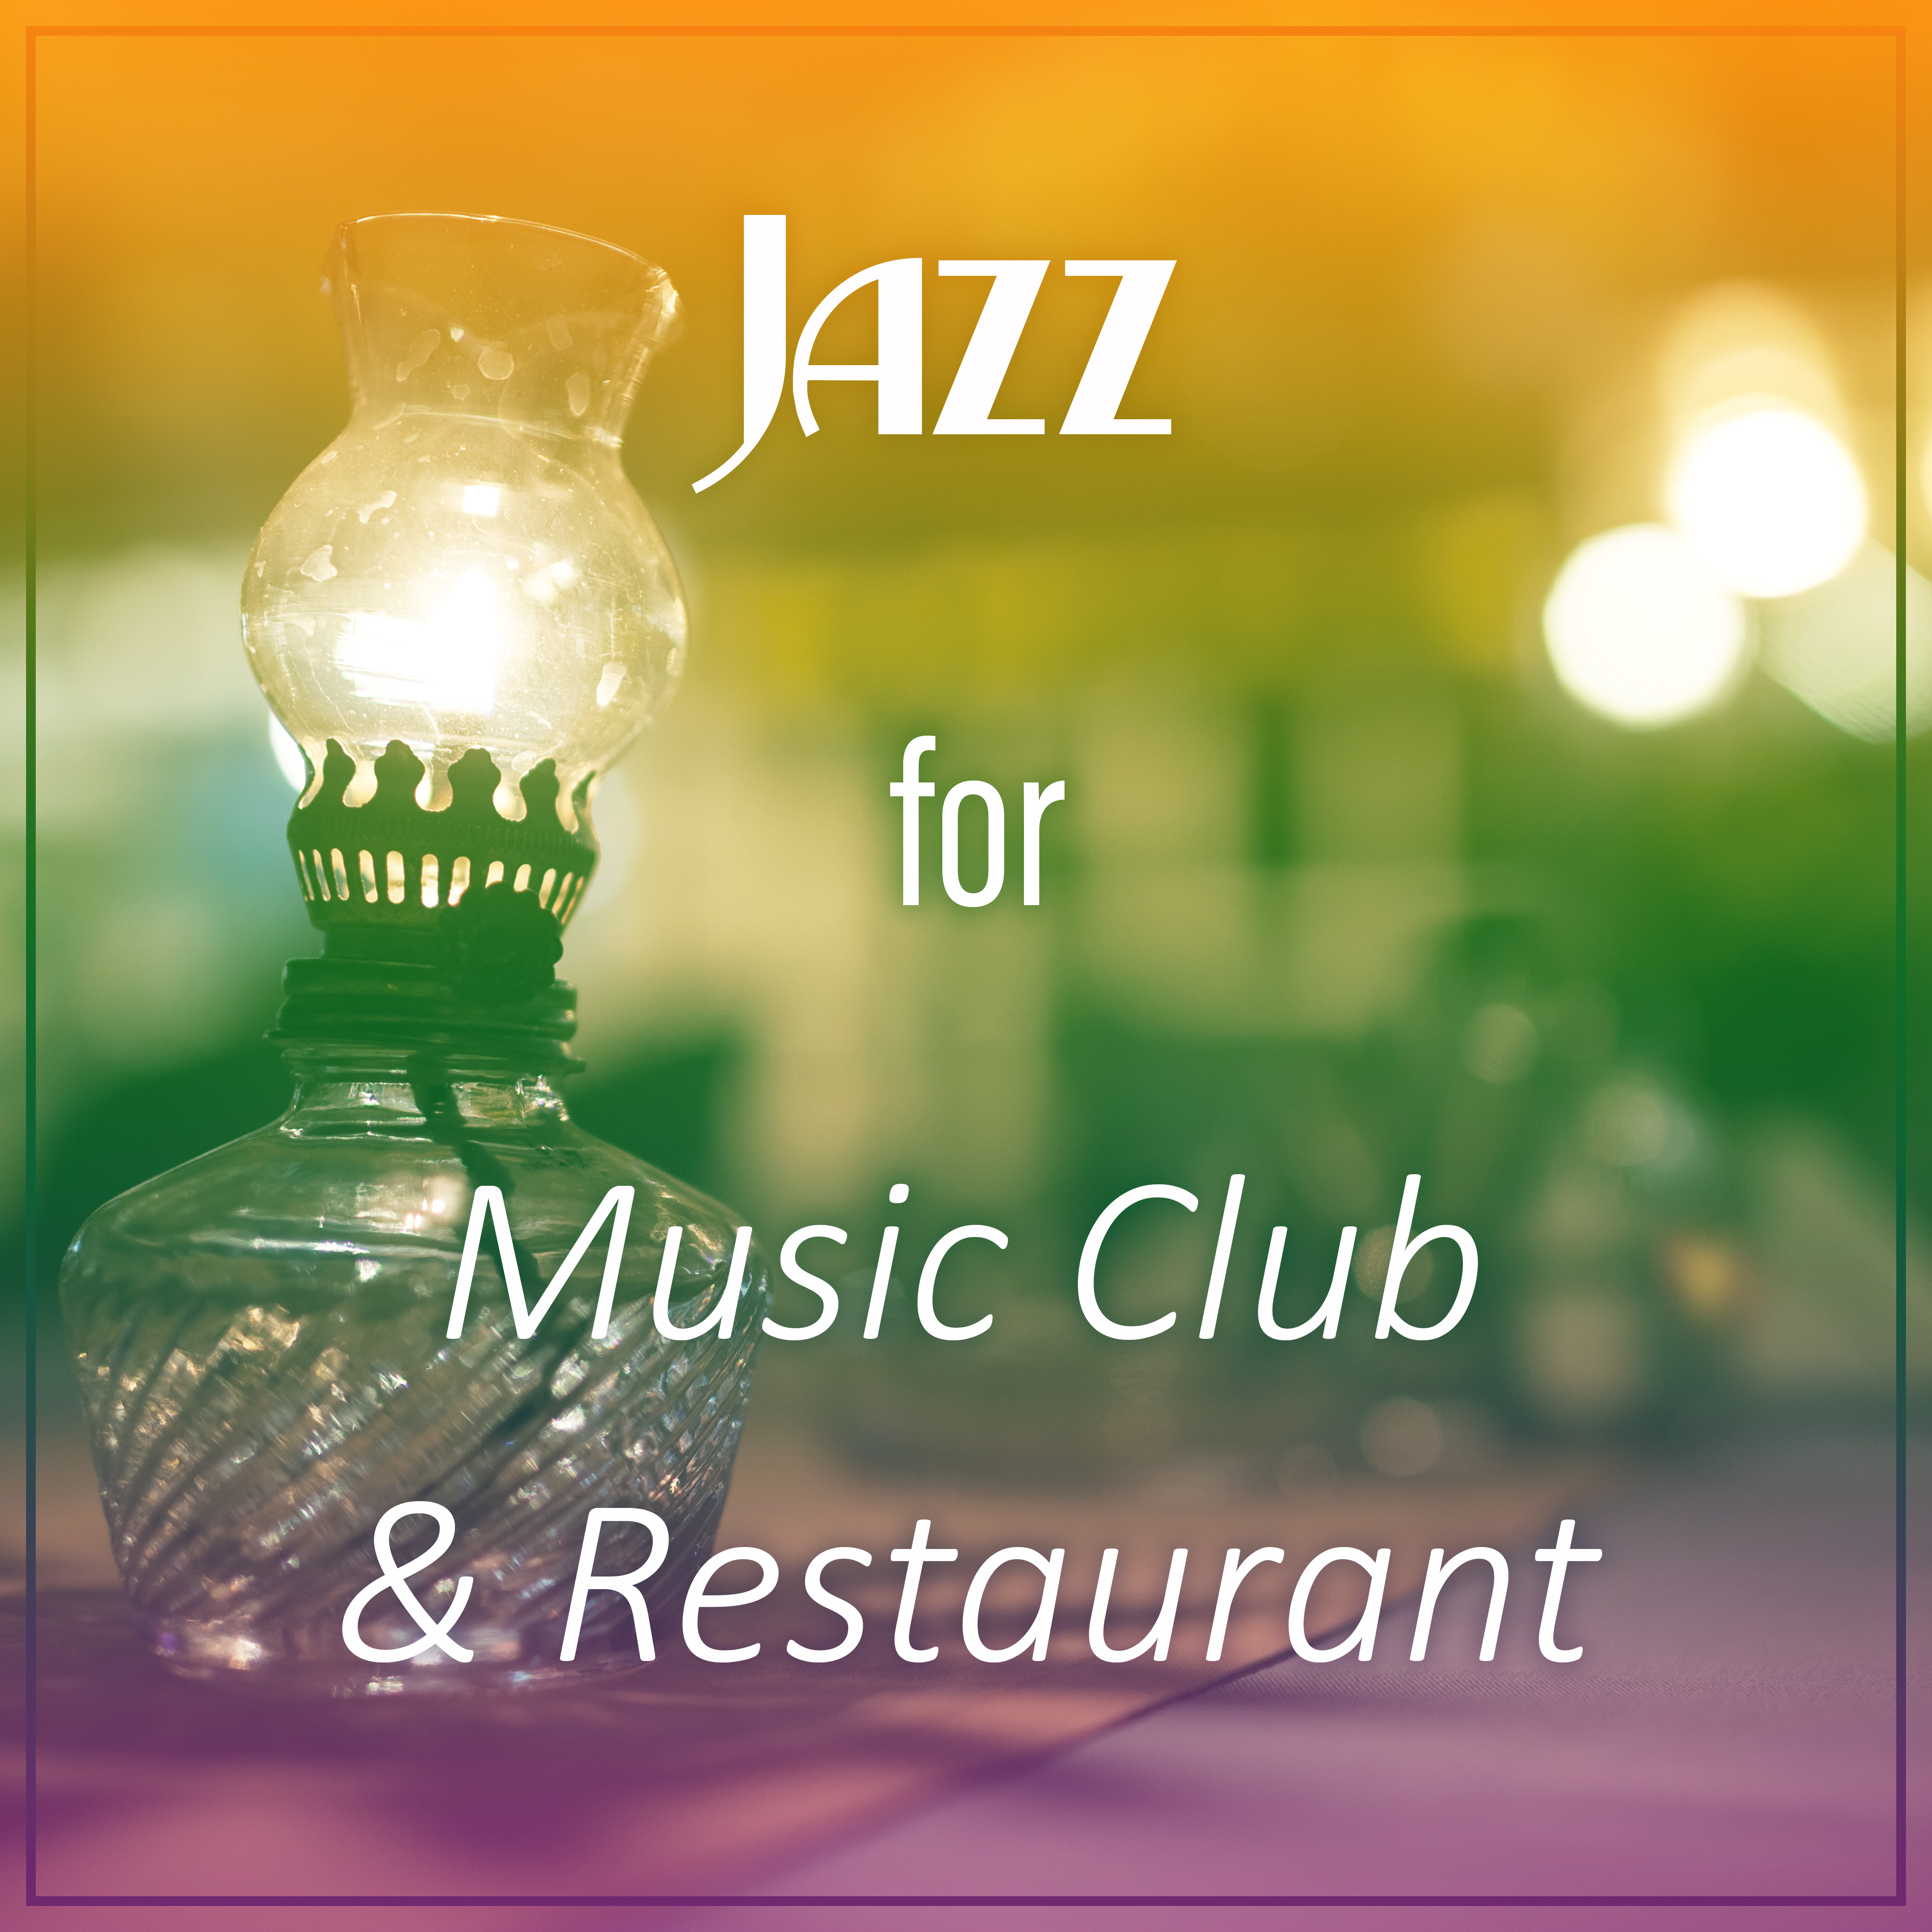 Jazz for Music Club  Restaurant  Peaceful Piano, Easy Listening Jazz for Restaurant, Instrumental Jazz for Music Club, Jazz Lounge